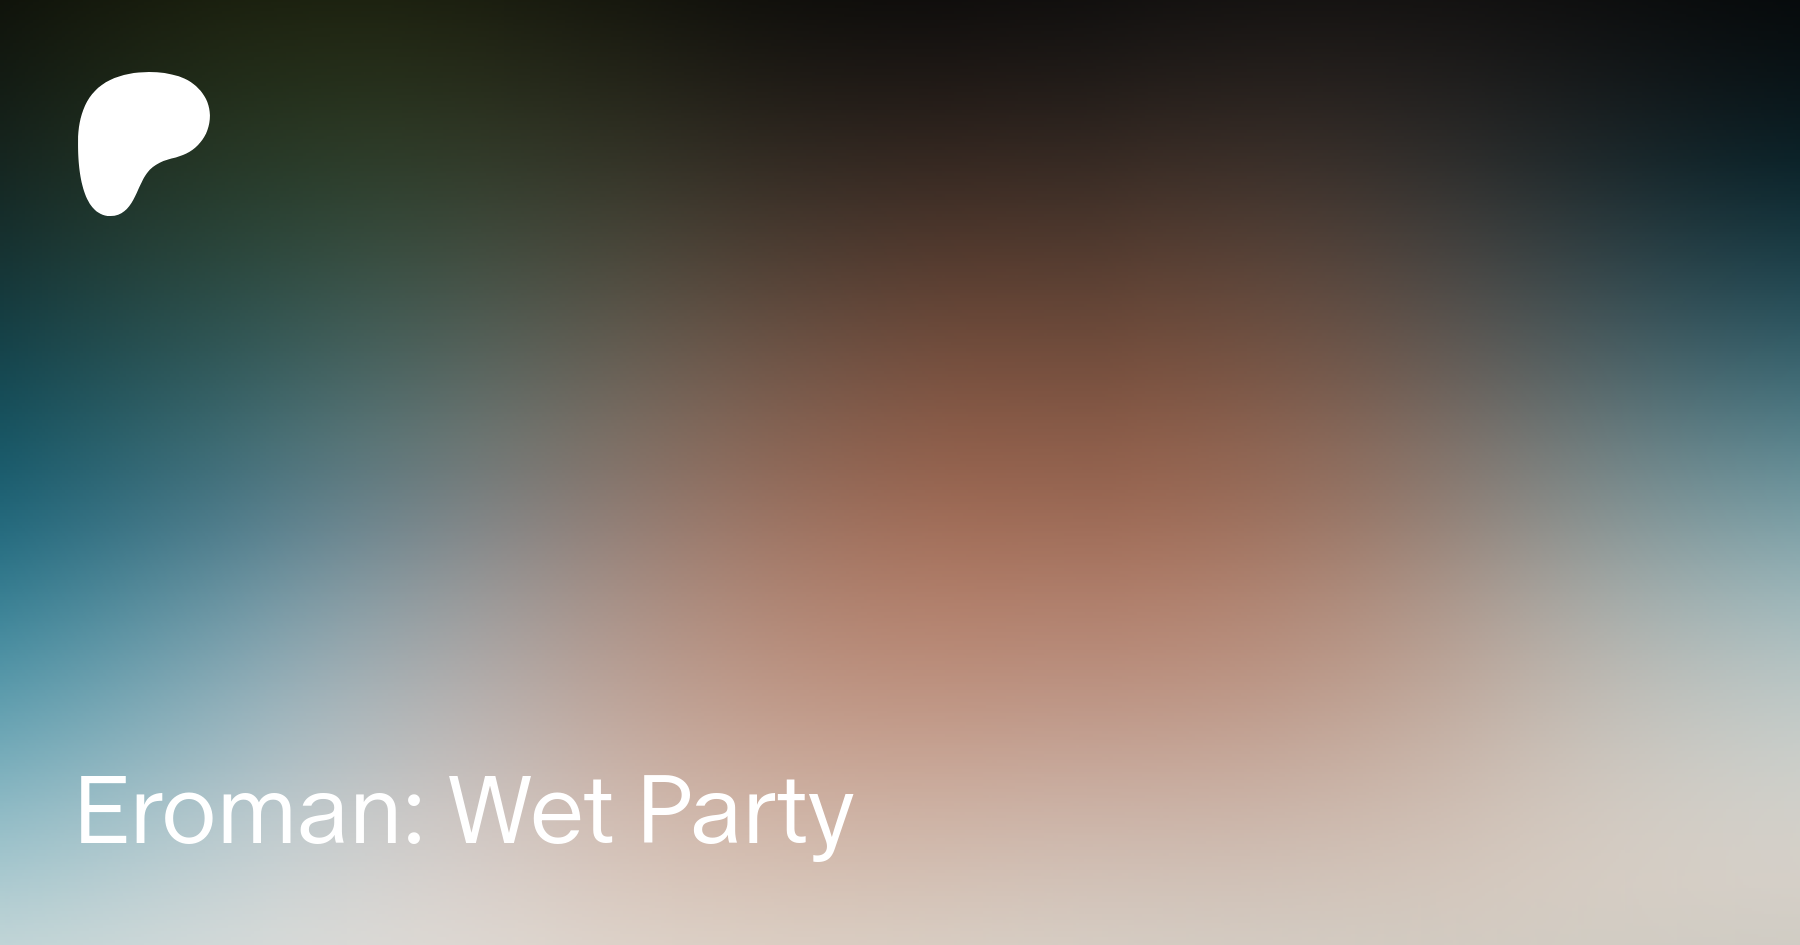 Eroman wet party